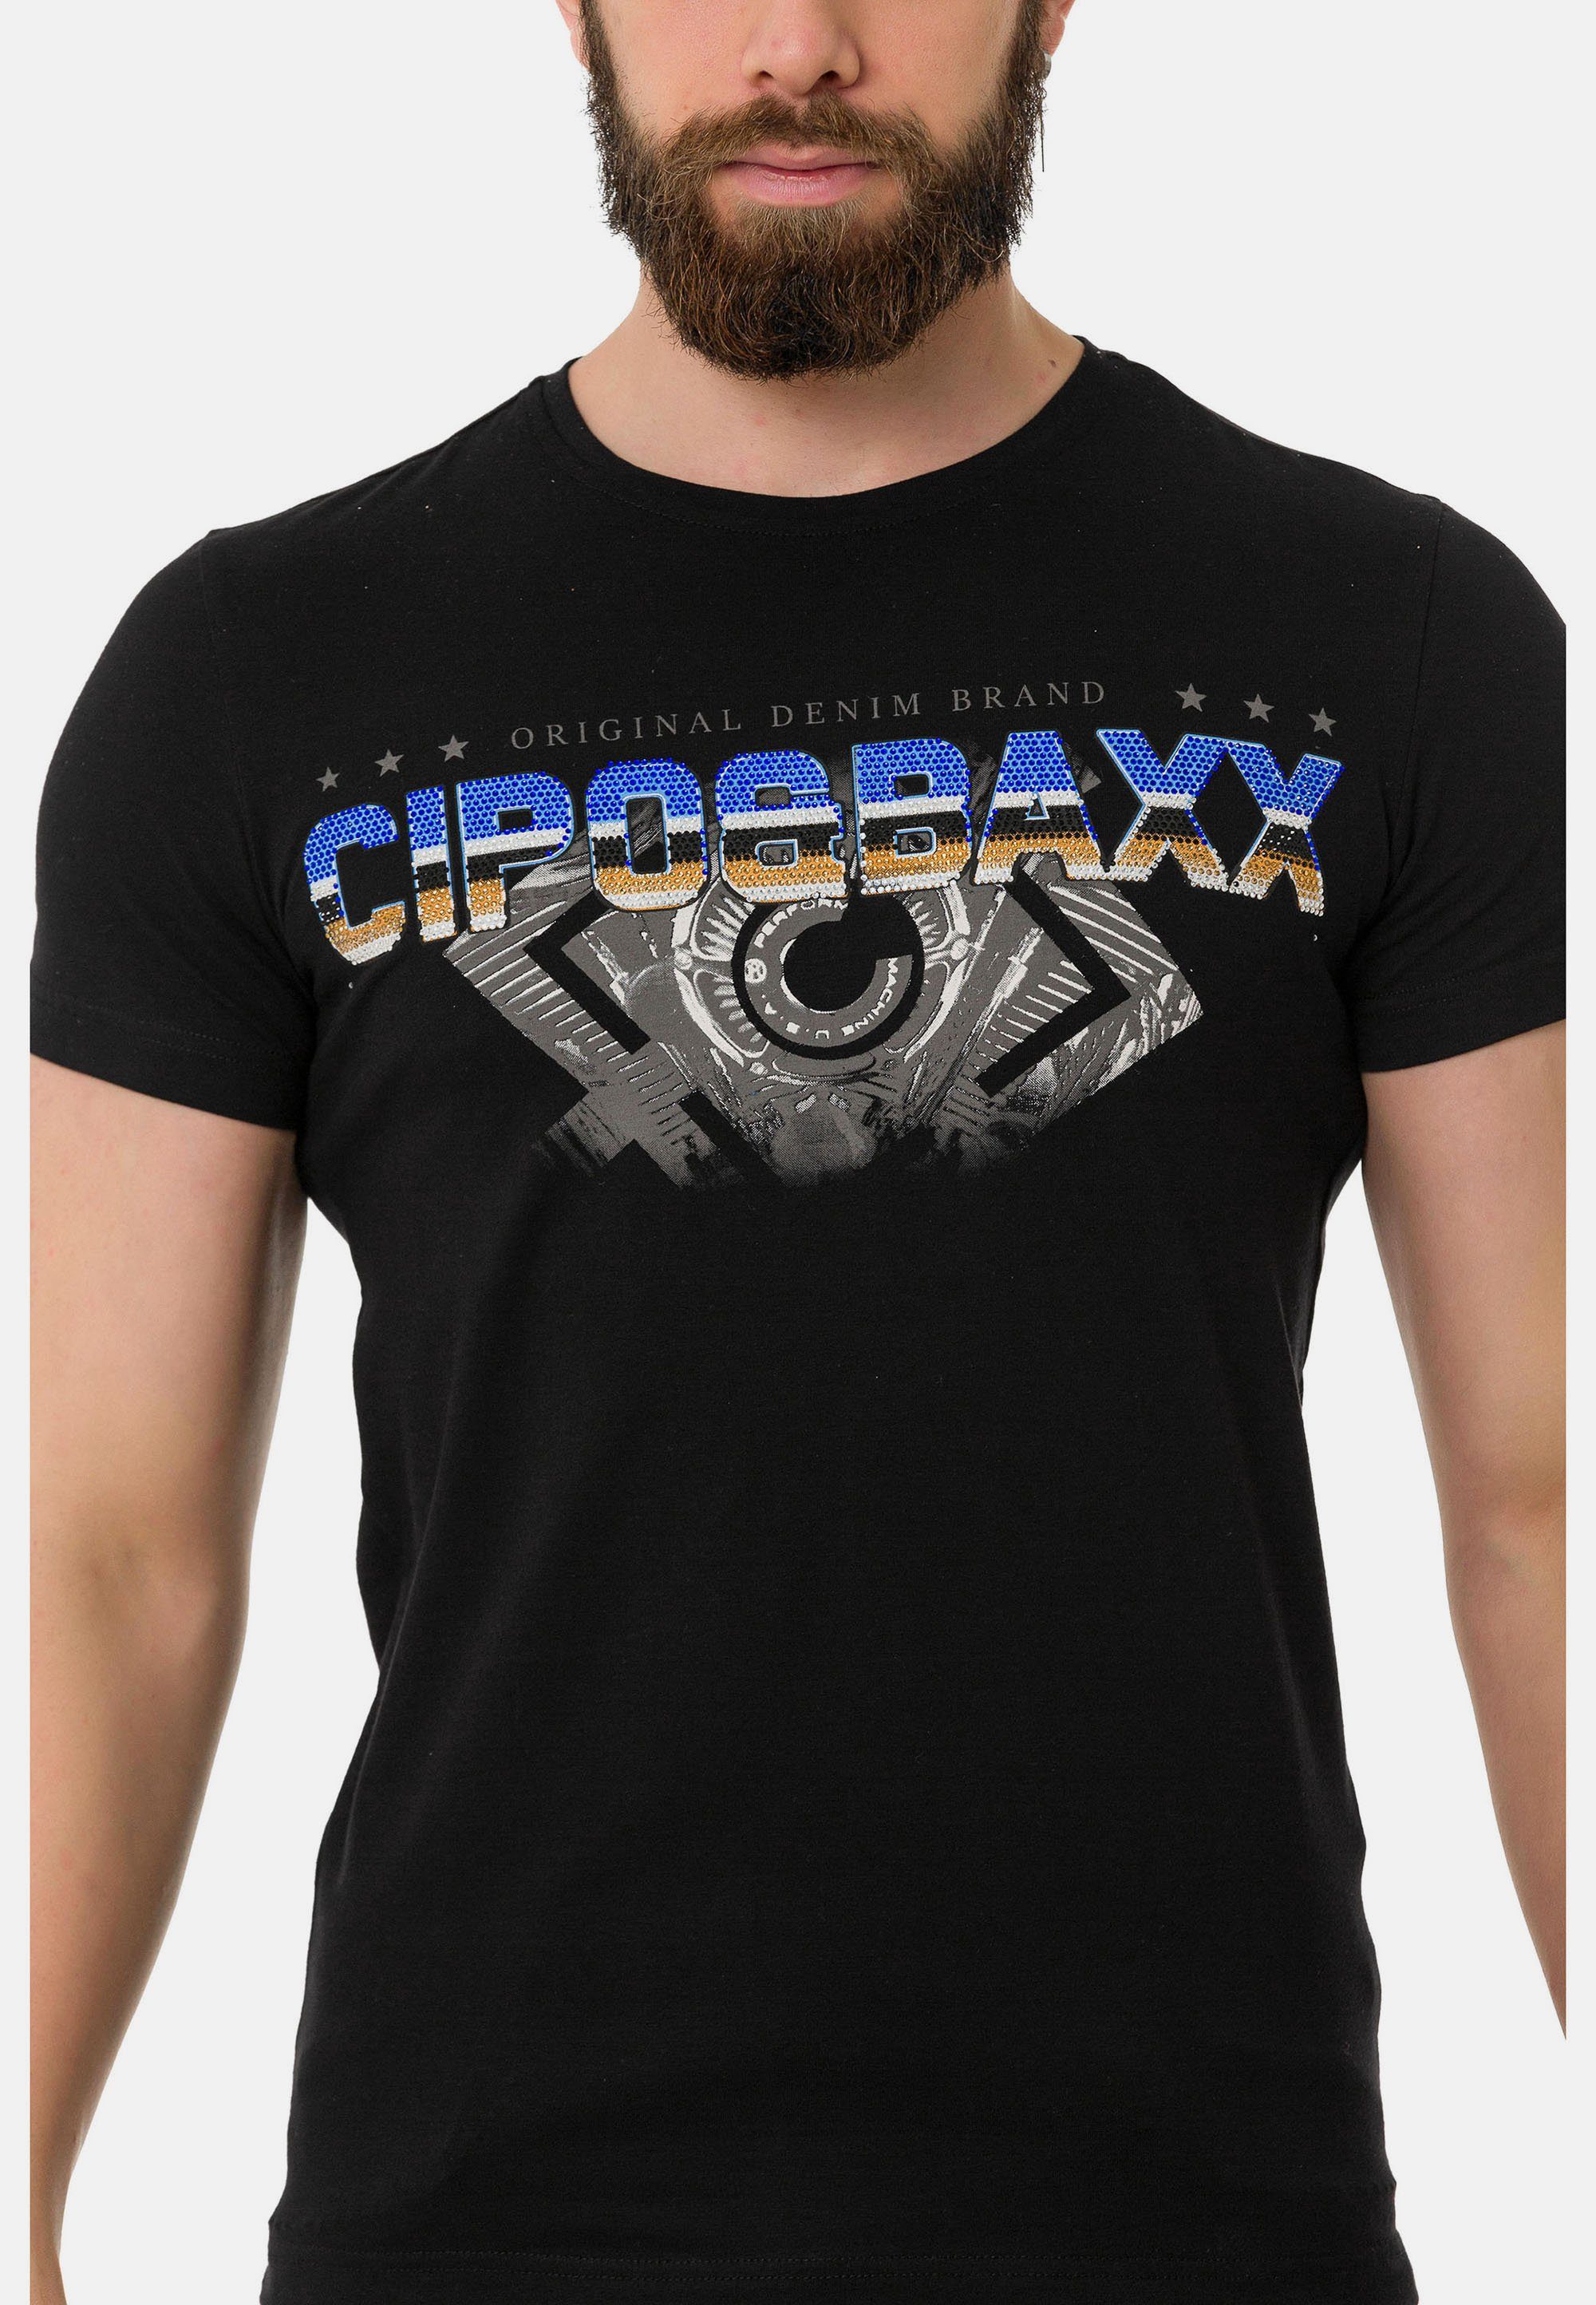 Baxx T-Shirt schwarz Cipo Marken-Schriftzug & trendigem mit